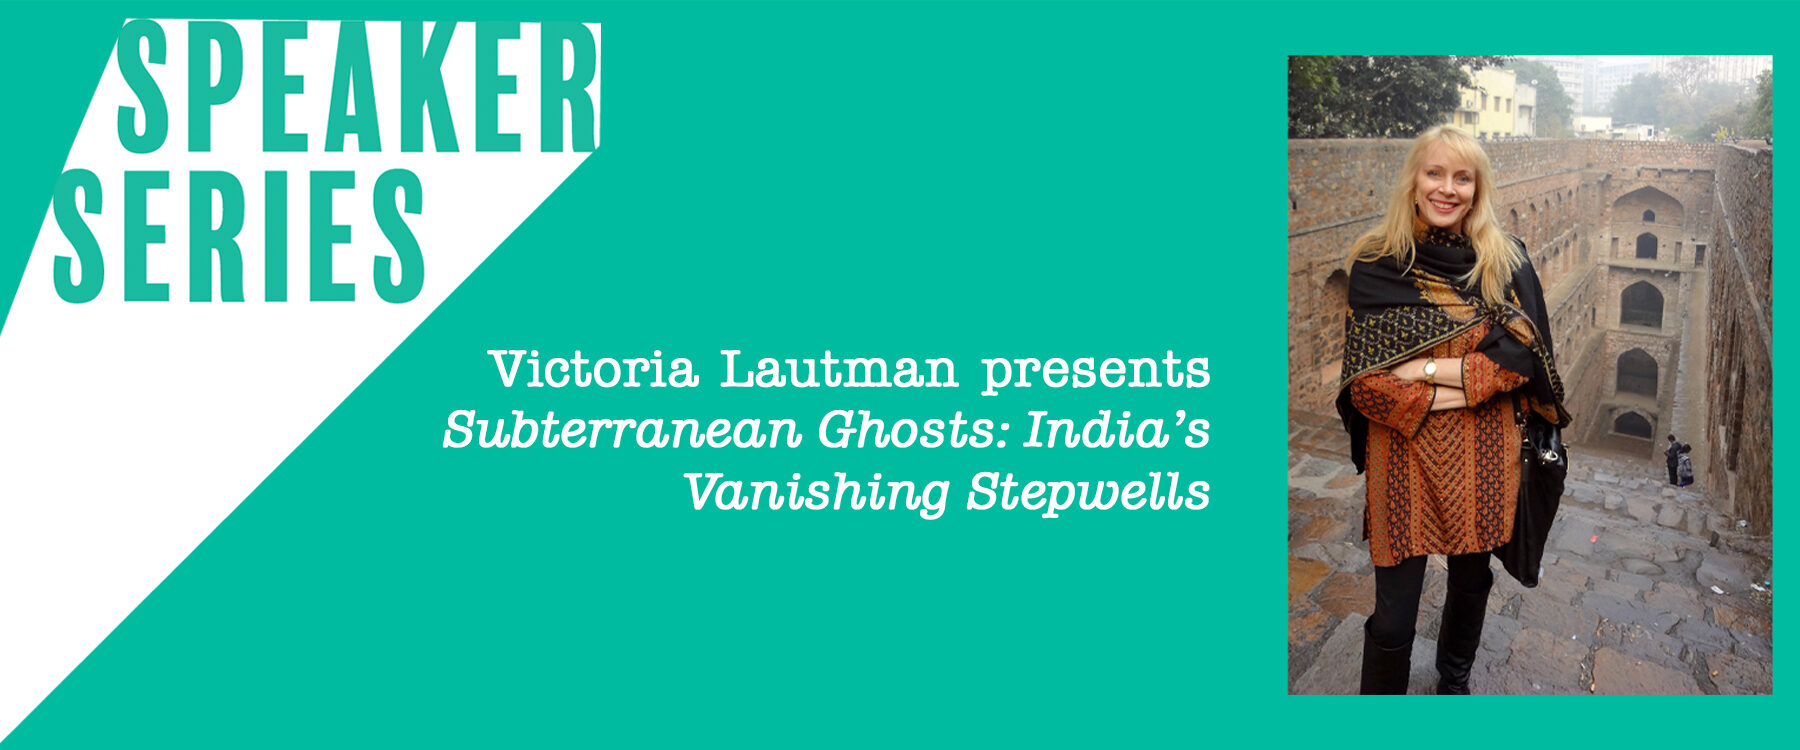 Victoria Lautman presentsSubterranean Ghosts: India’s Vanishing Stepwells